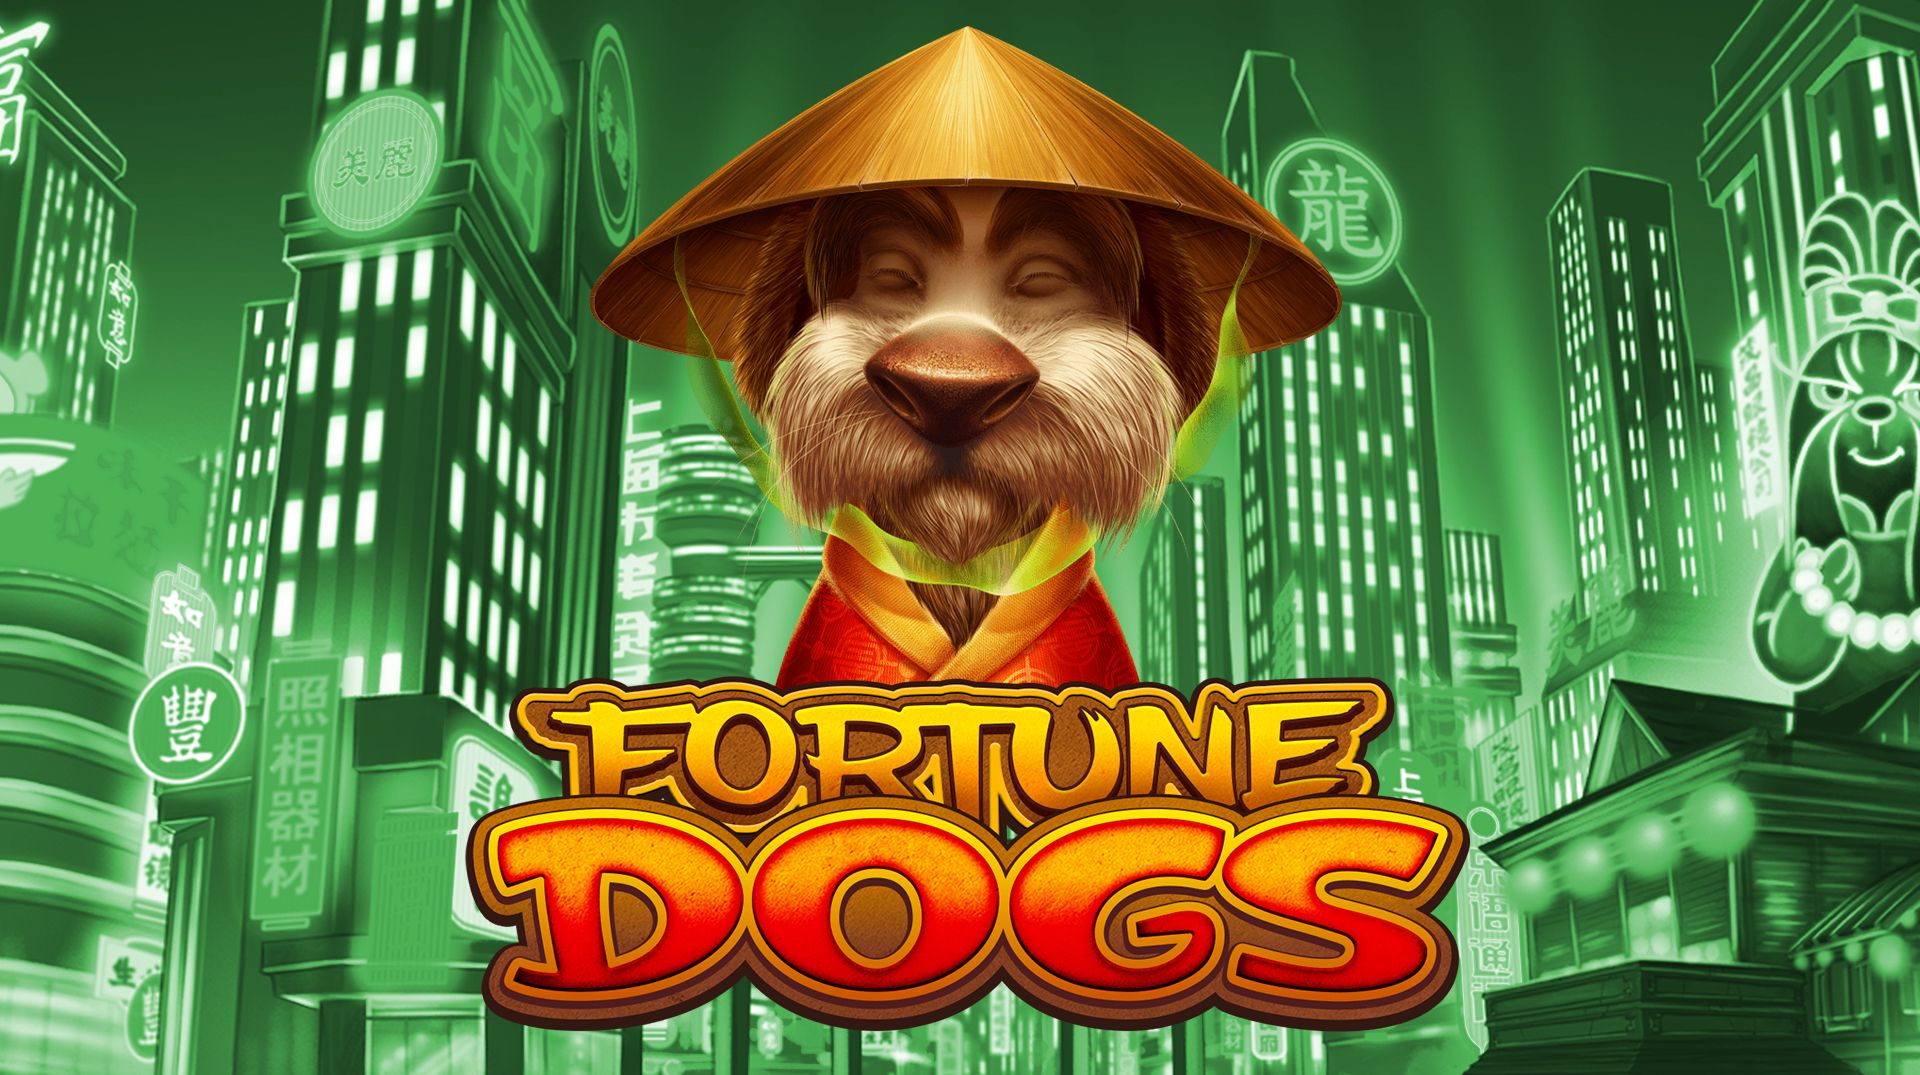 Fortune Dogs Slot Machine online